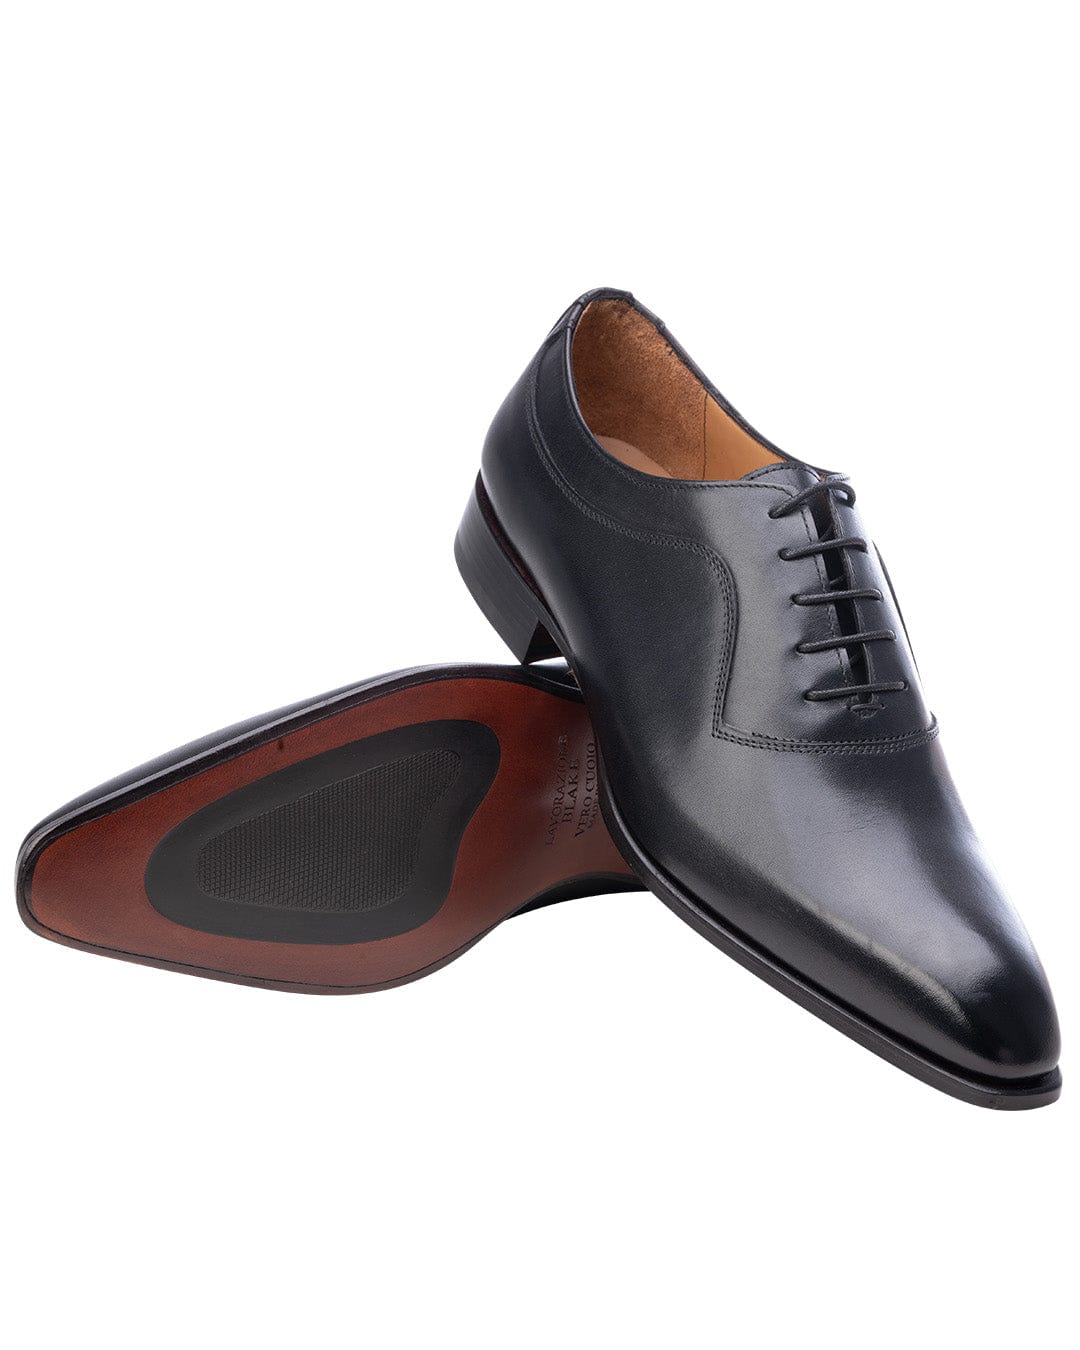 Gagliardi Shoes Gagliardi Black Made in Italy Oxford Shoes